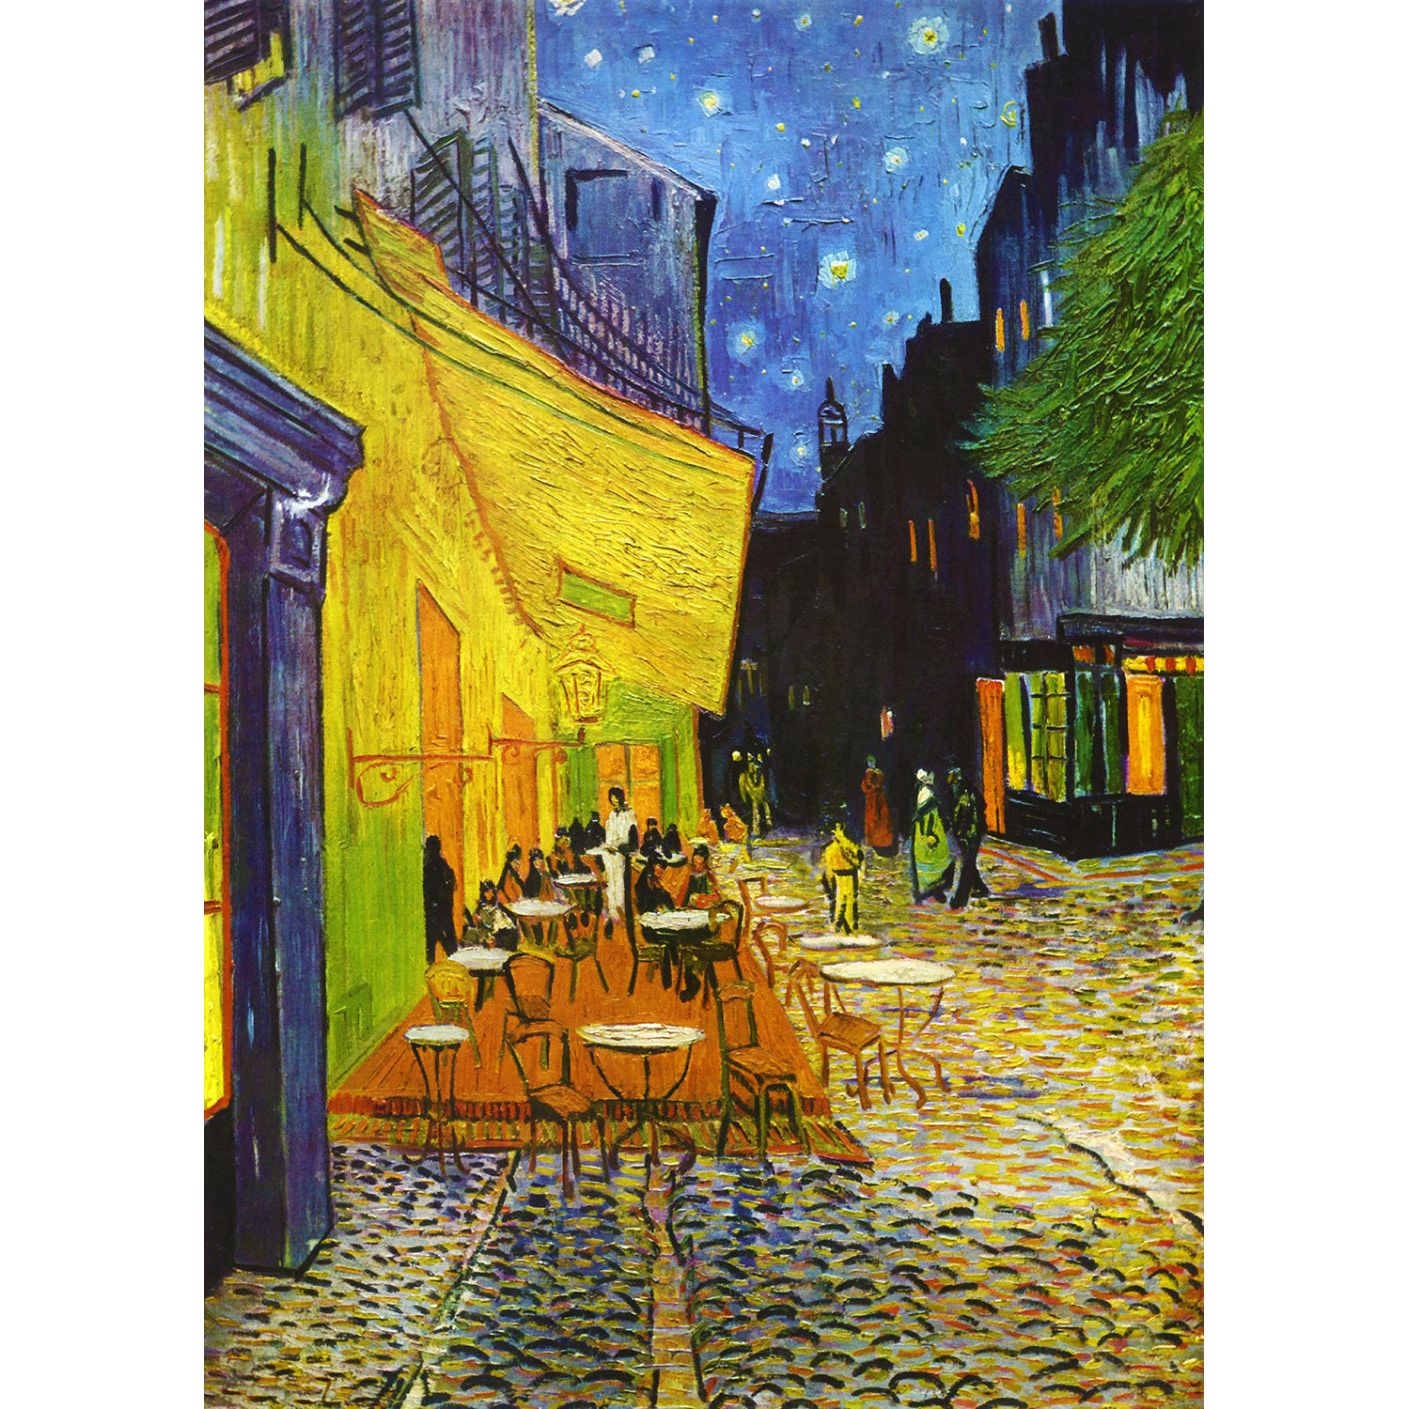 ENJOY Puzzle | 1000 Teile | Vincent Van Gogh: Cafe-Terrasse bei Nacht